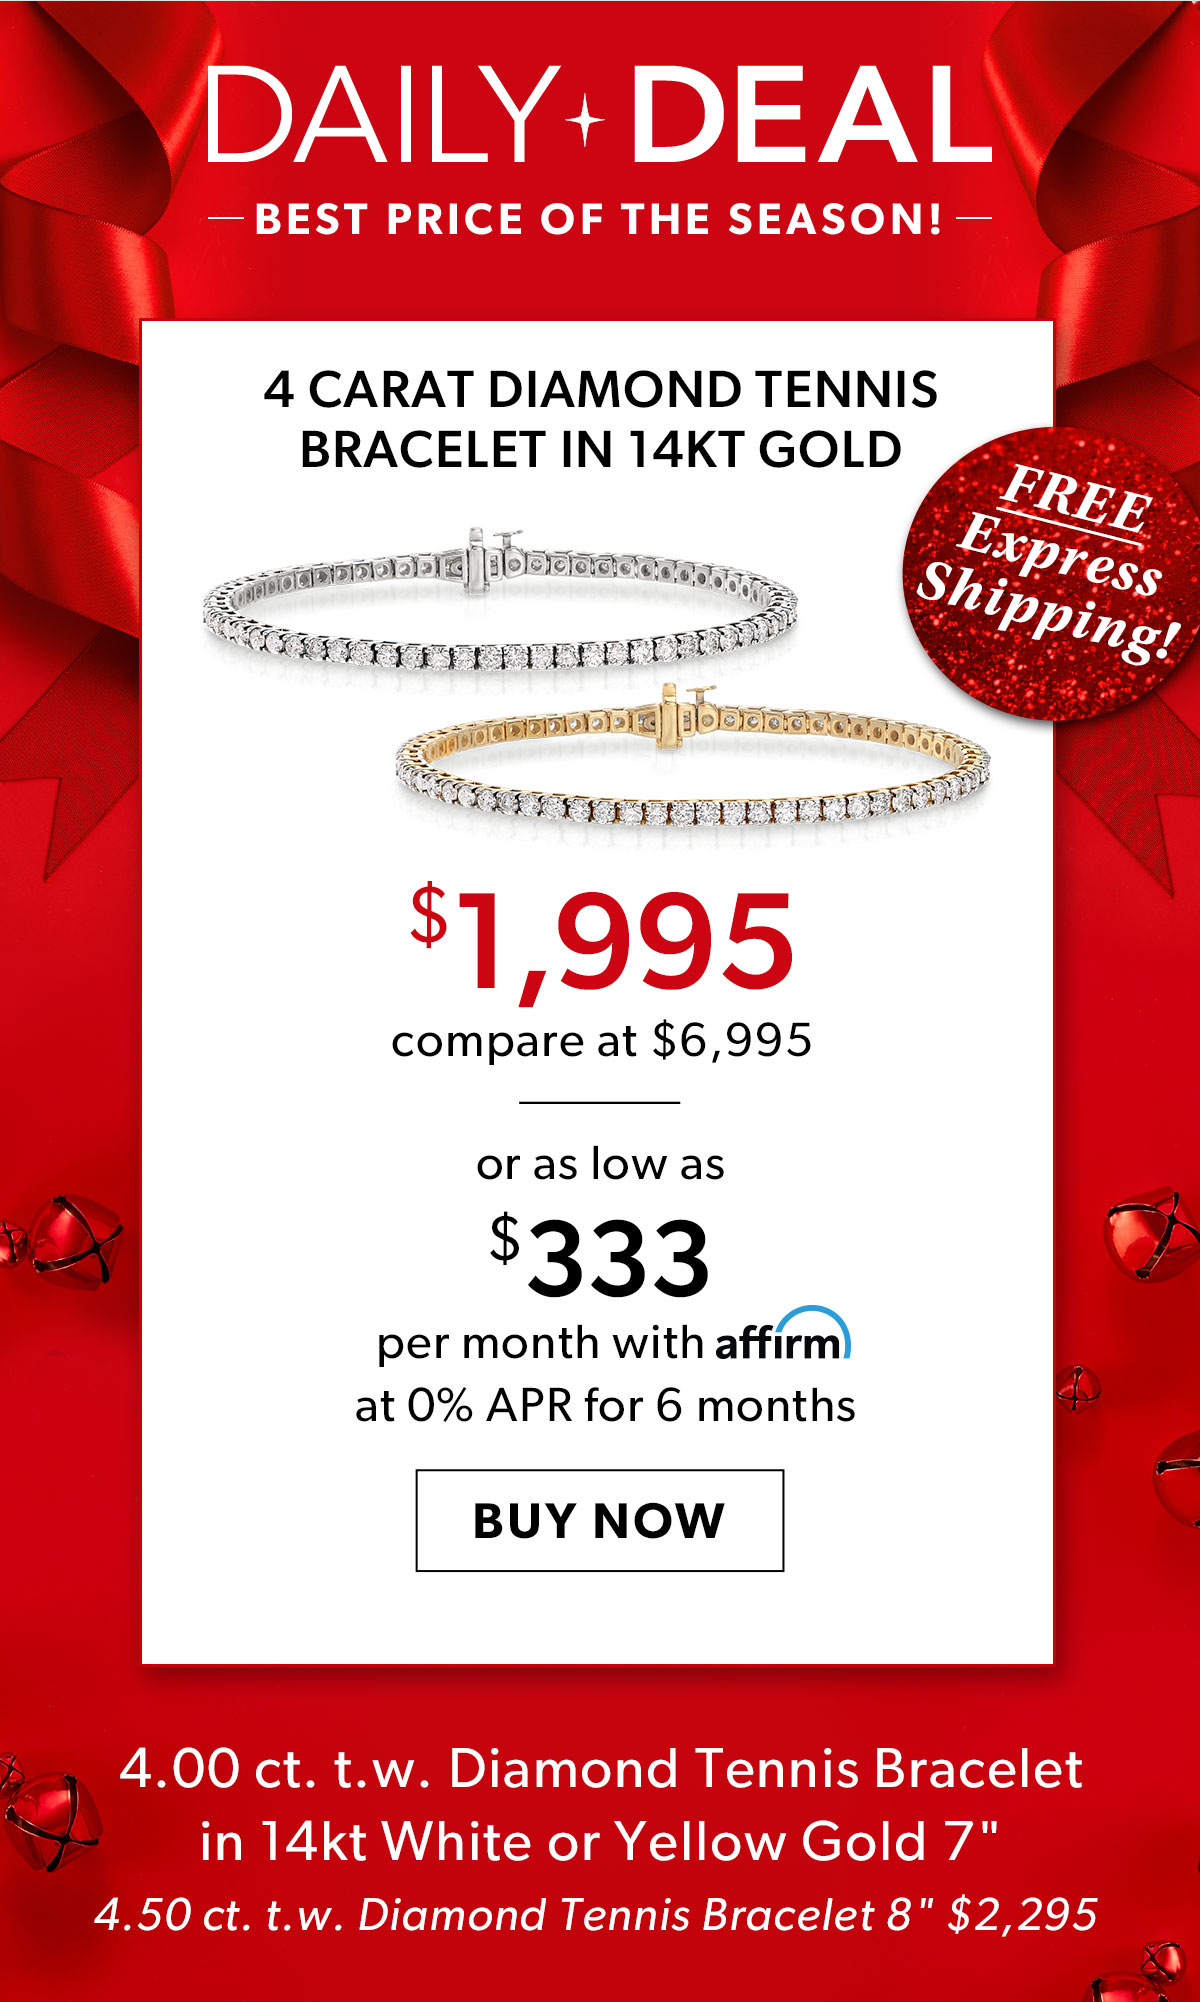 4 Carat Diamond Tennis Bracelet in 14kt Gold. $1,995. Buy Now